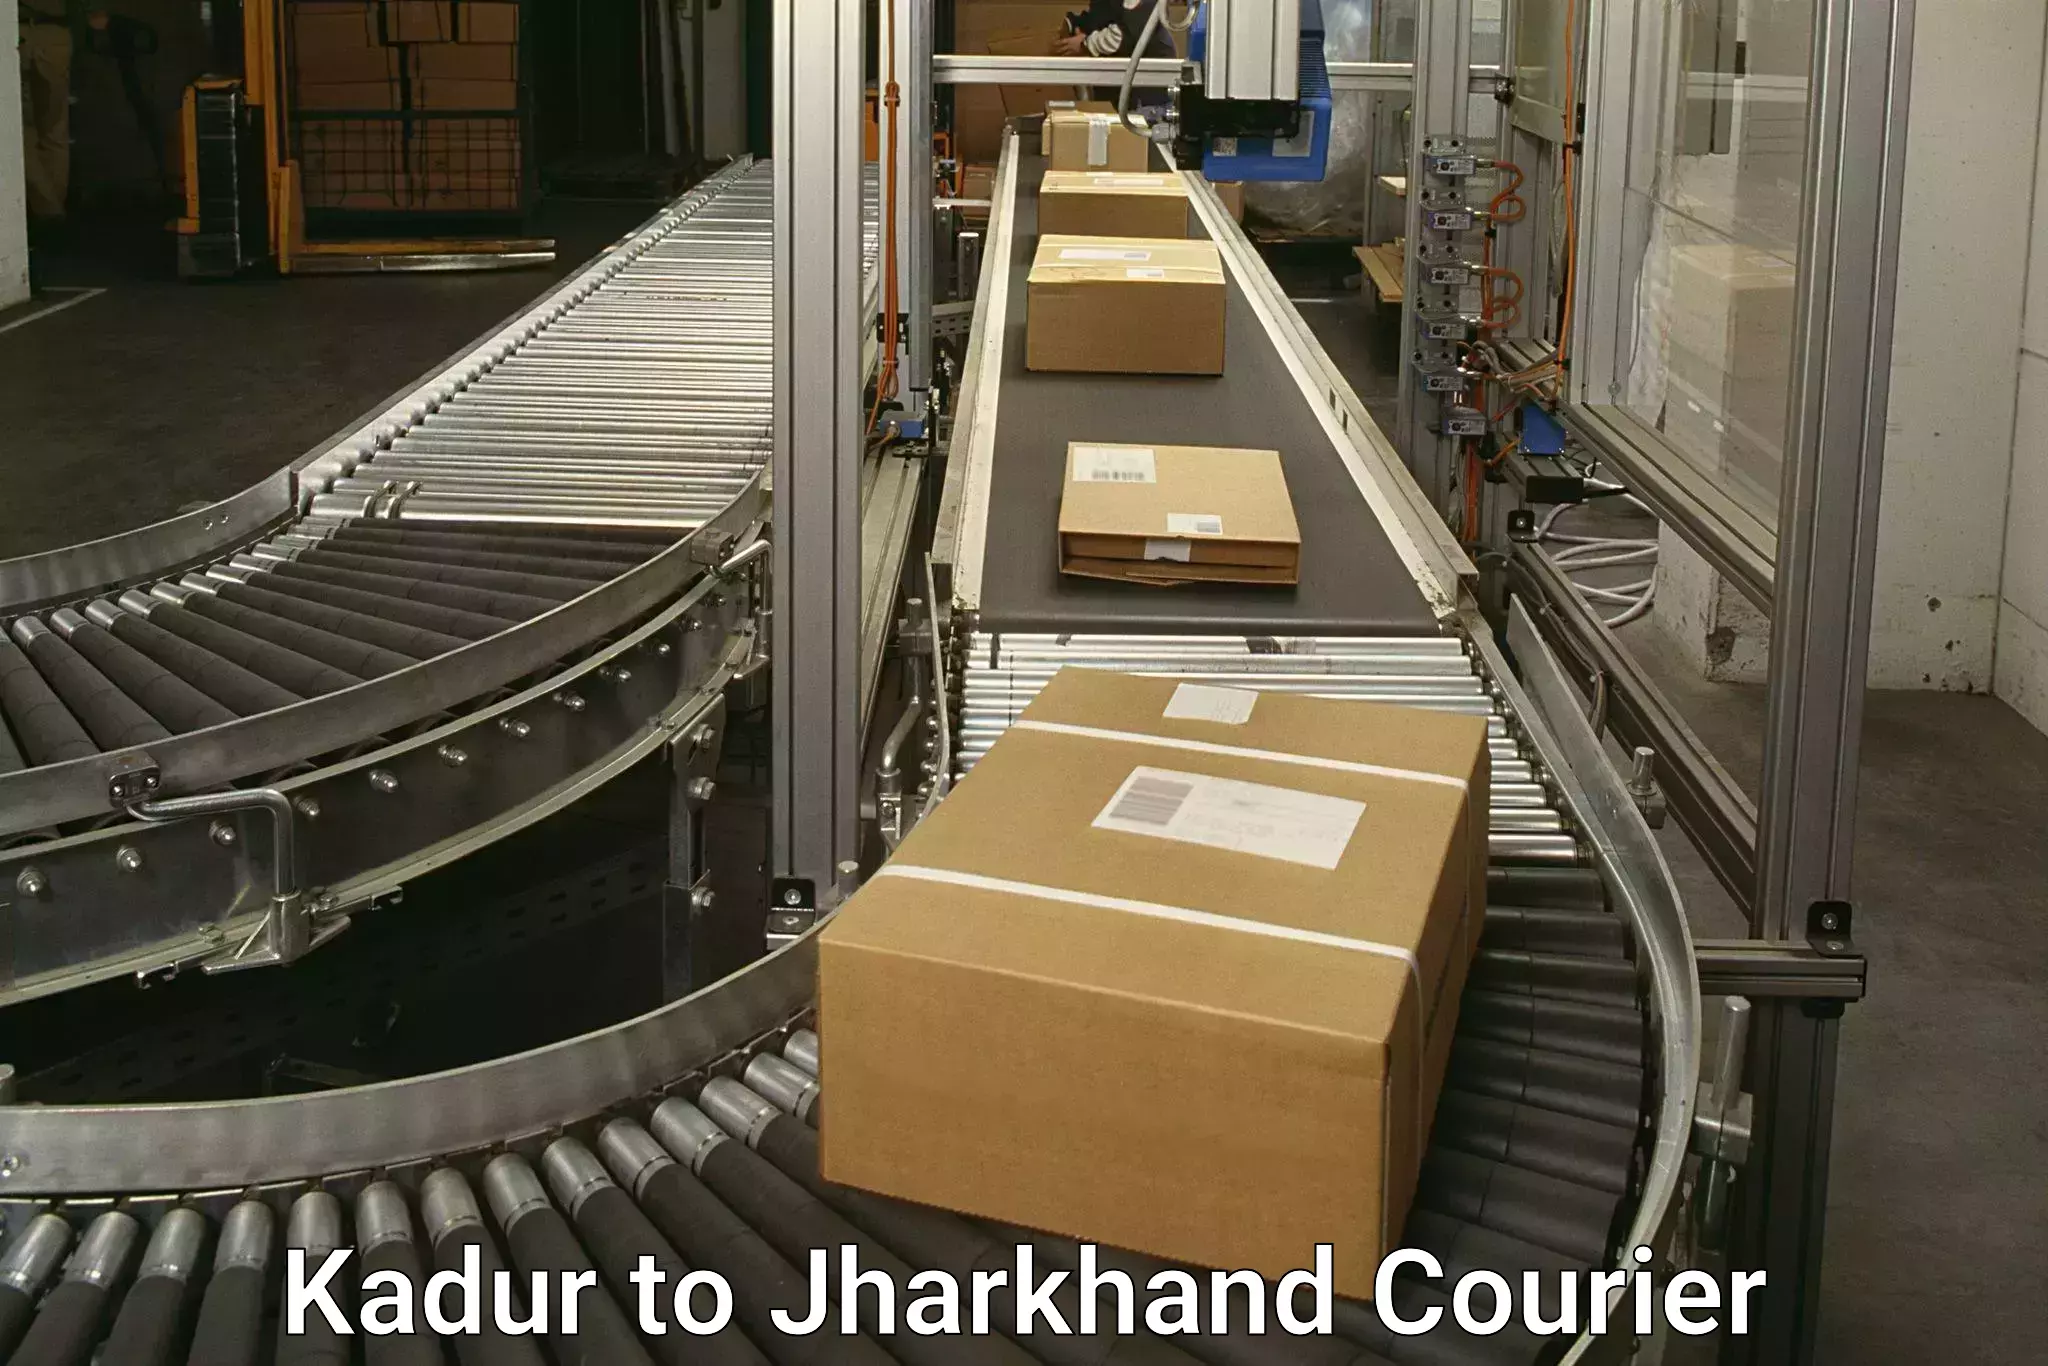 Fast-track shipping solutions Kadur to Bokaro Steel City